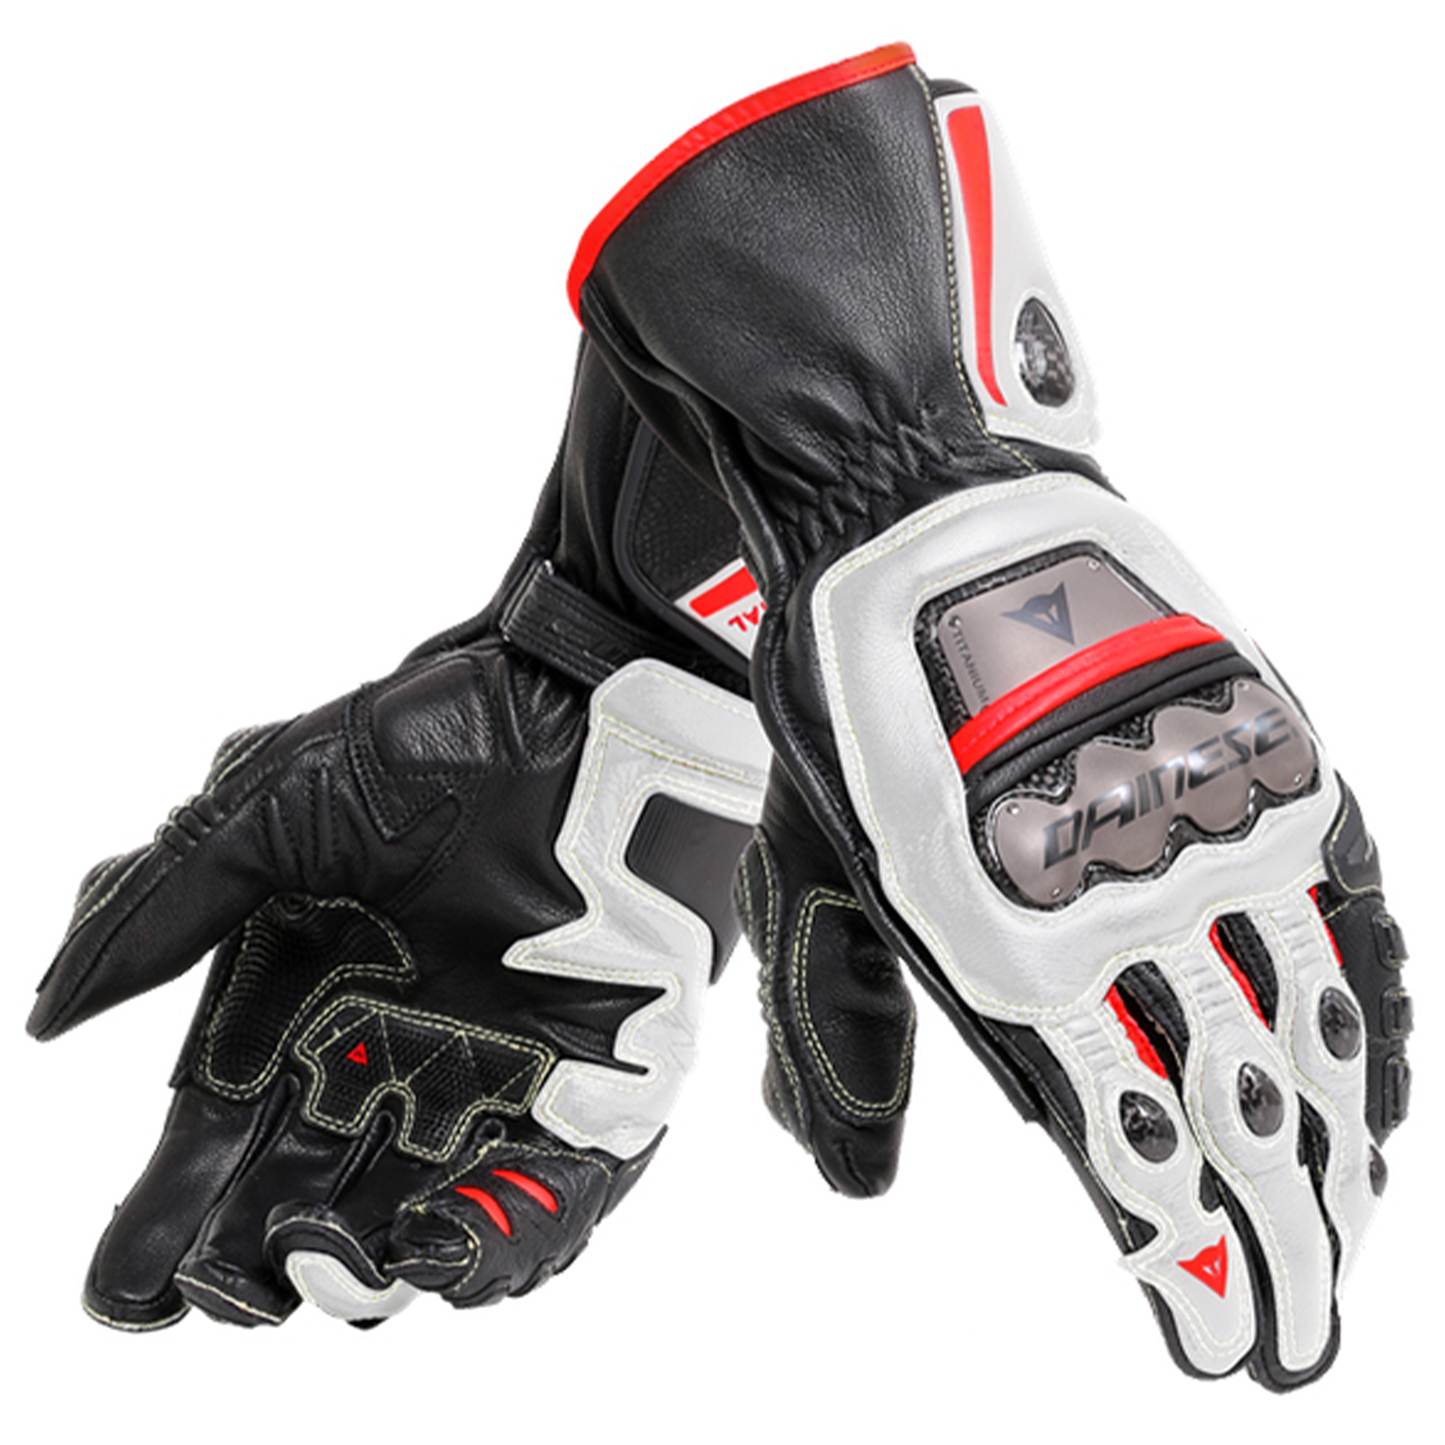 Dainese Full Metal 6 Gloves - Black/White/Lava Red (A66)